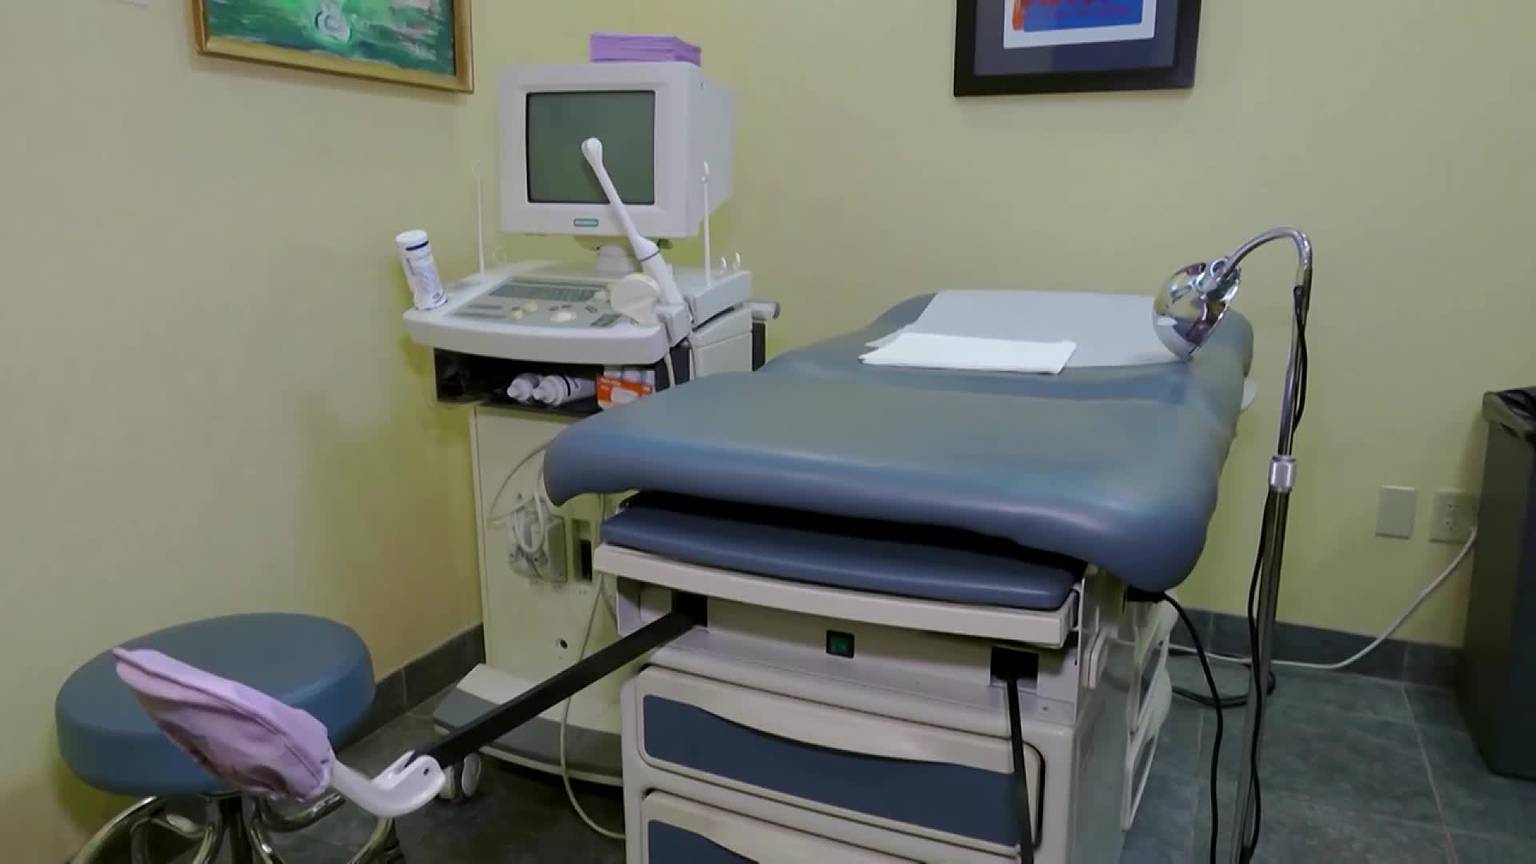 Video: ‘So depressing’: Arizona abortion providers on ban [Video]